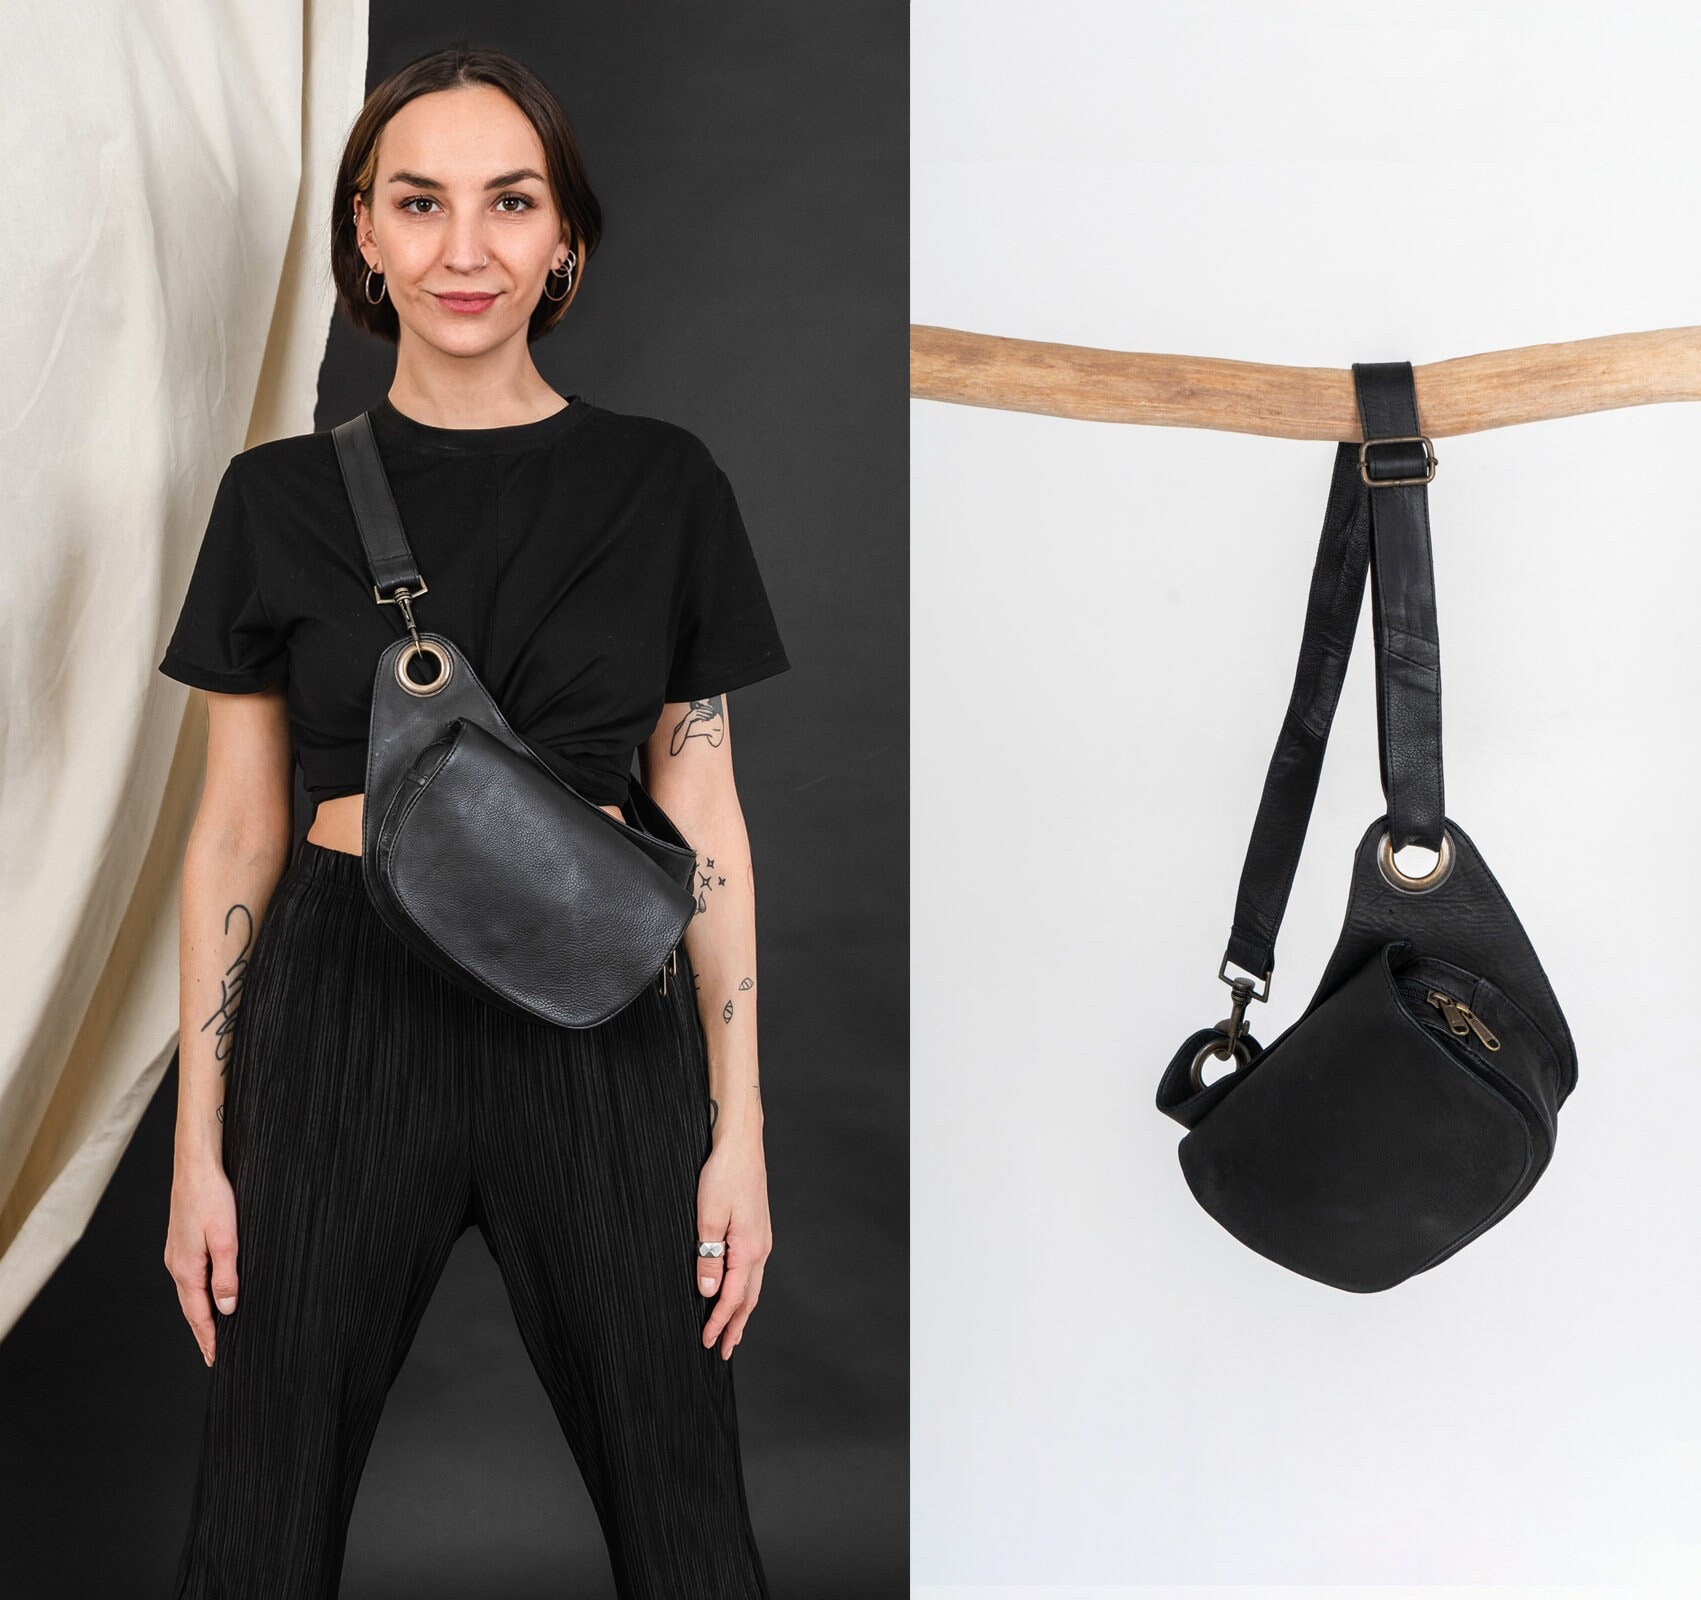 Waist Bag Belt Purses Men Pack Designer Bag Fashion Bag Man Waists Packs  Tote Pouch Leather Waist Bags Travel Purse Bumbag Chest Bag - China  Shoulder Bag and Tote Bag price